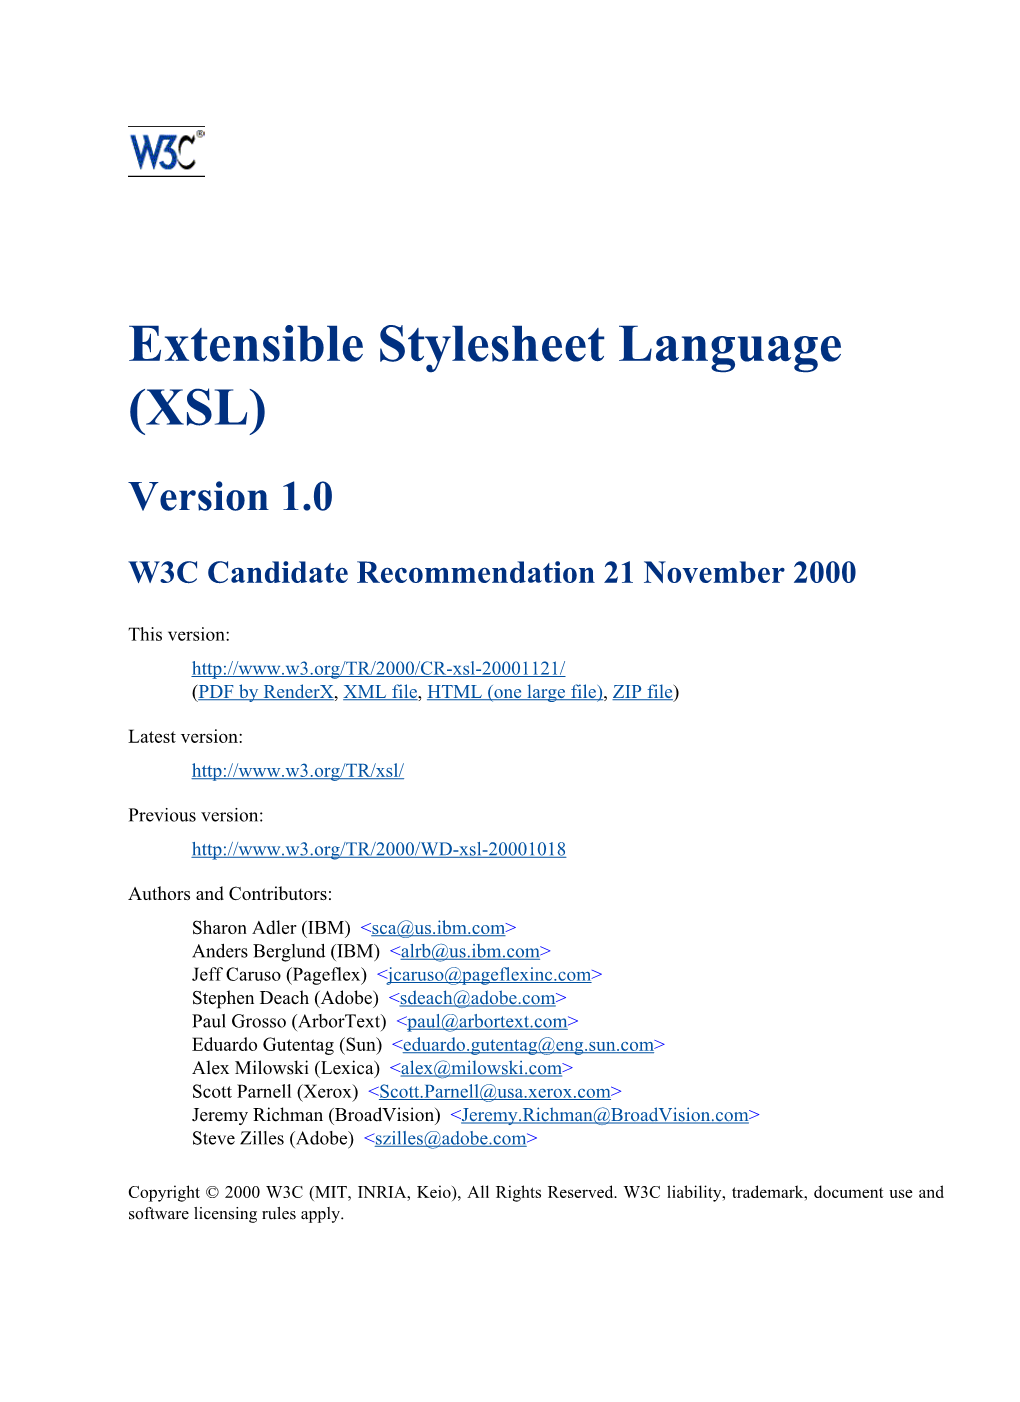 Extensible Stylesheet Language (XSL) Version 1.0